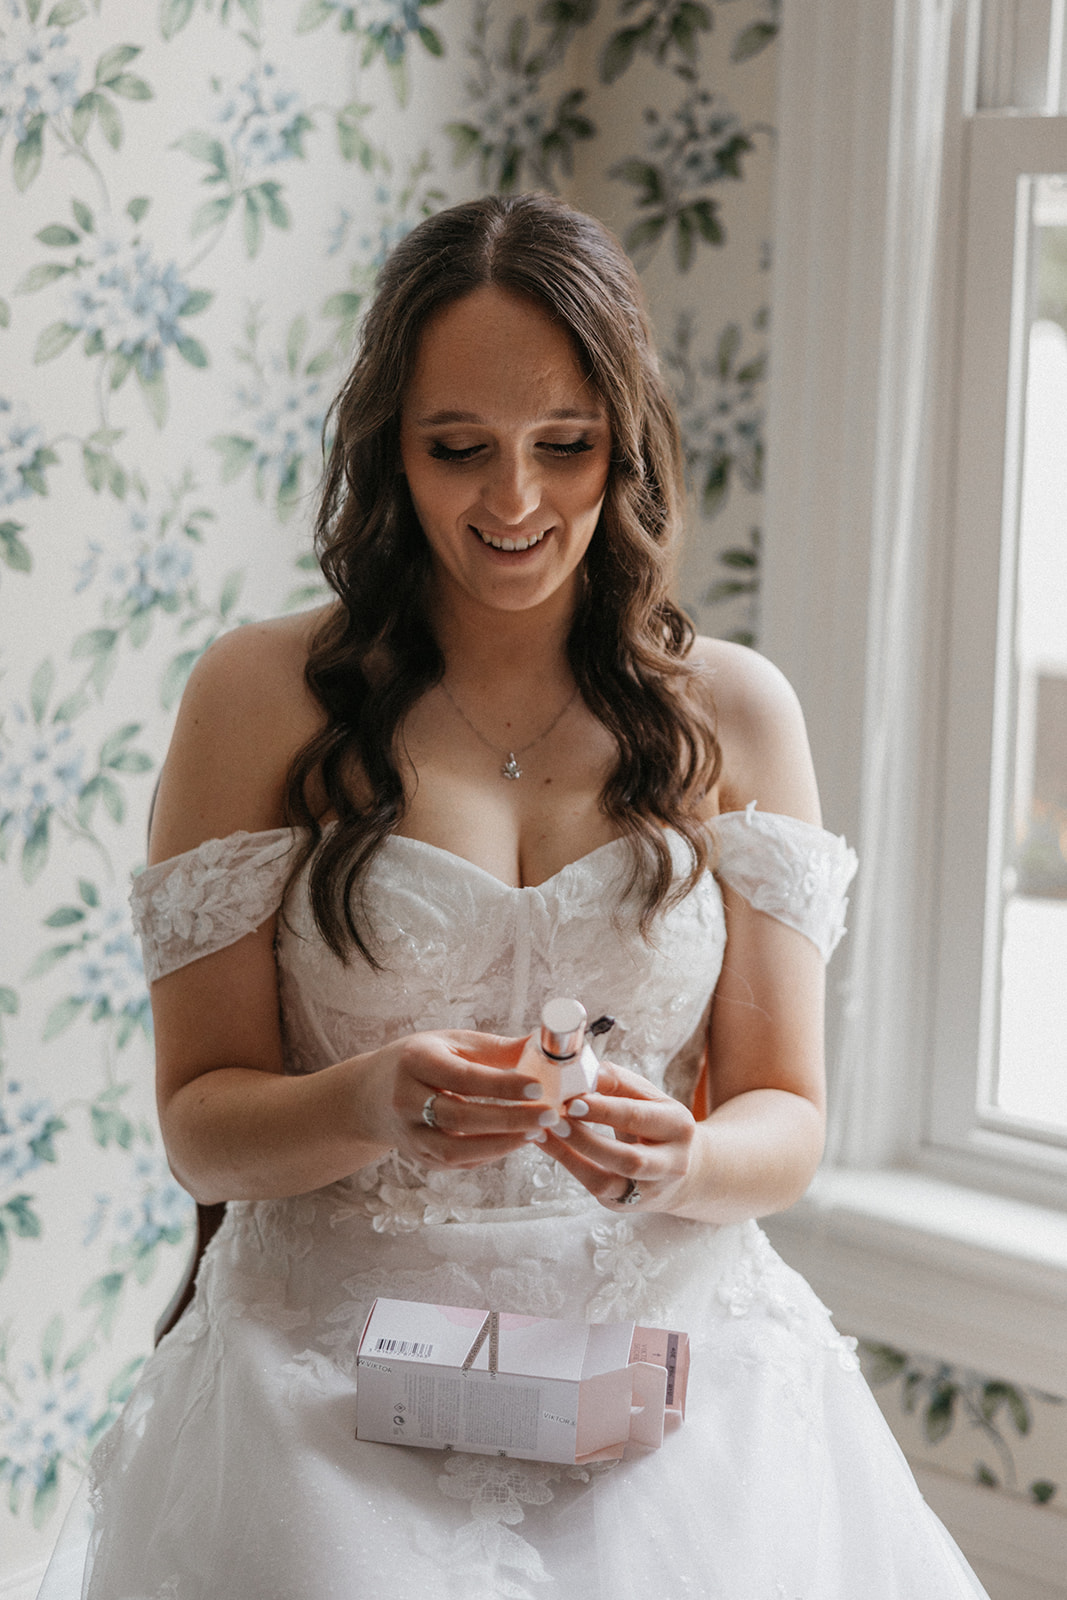 Stunning bride finalizes getting ready for her sentimental Georgia wedding